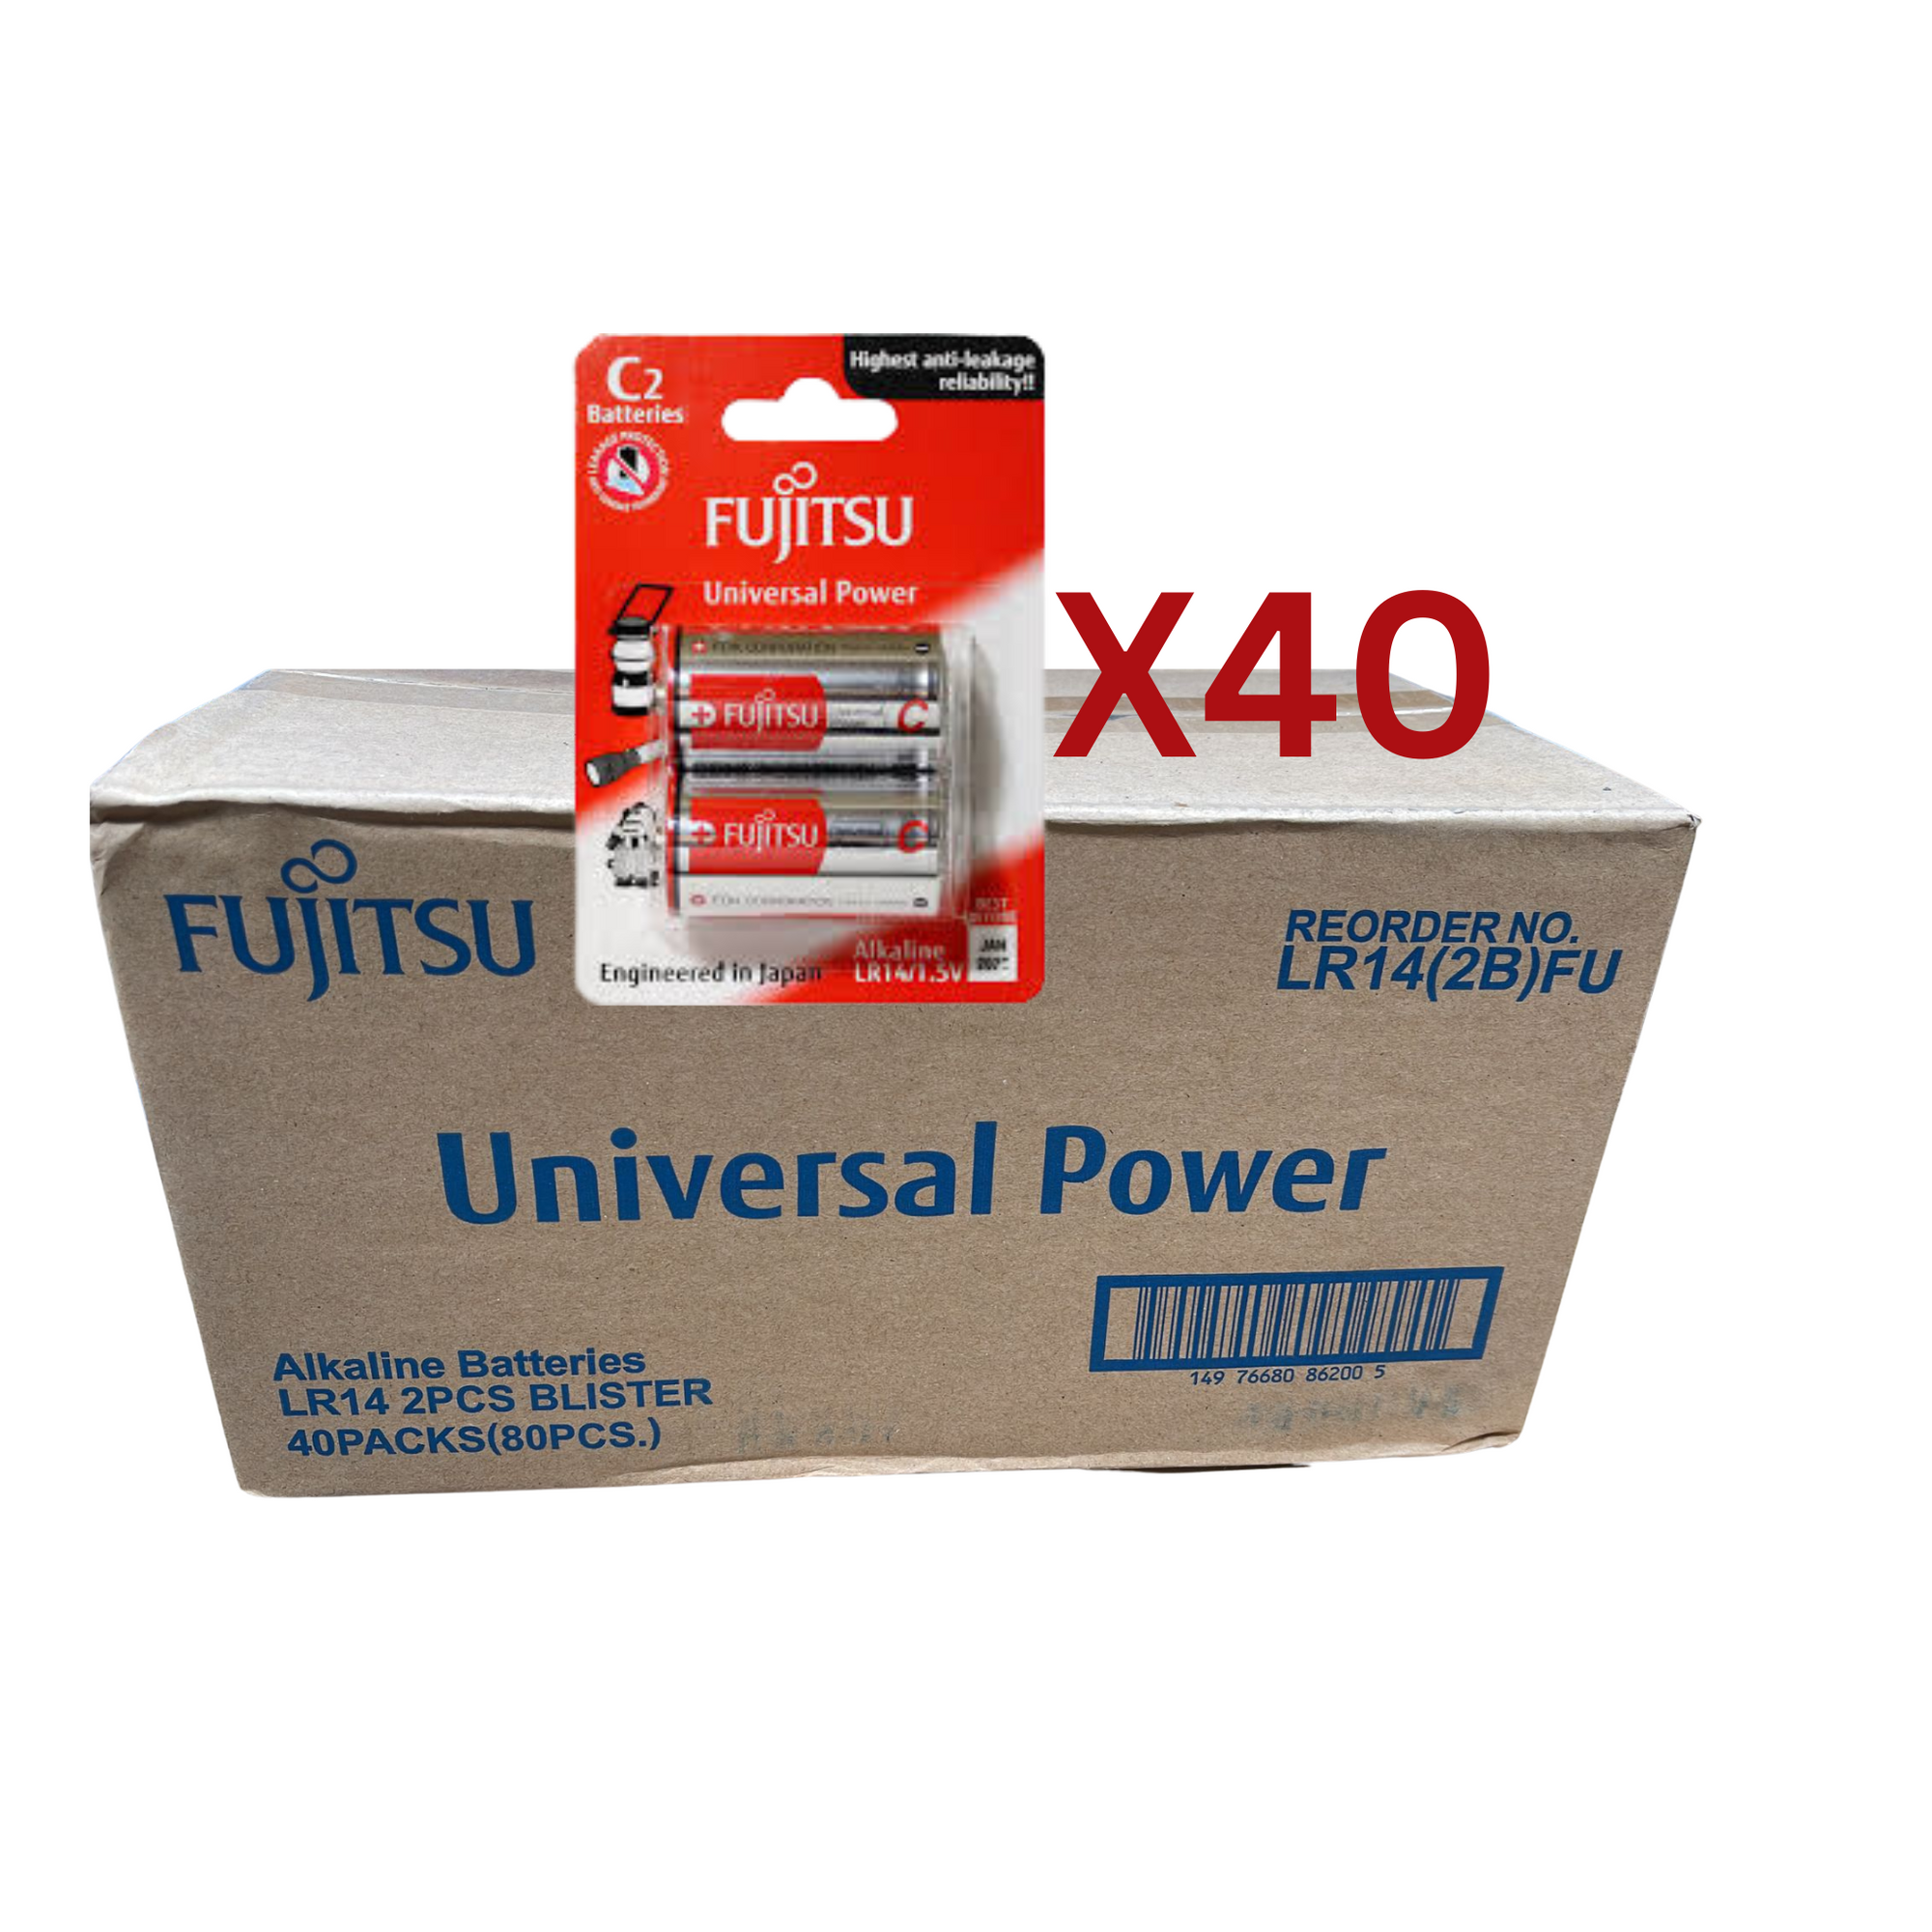 Fujitsu Alkaline Universal C2 LR14(2B)FU - Wholesale